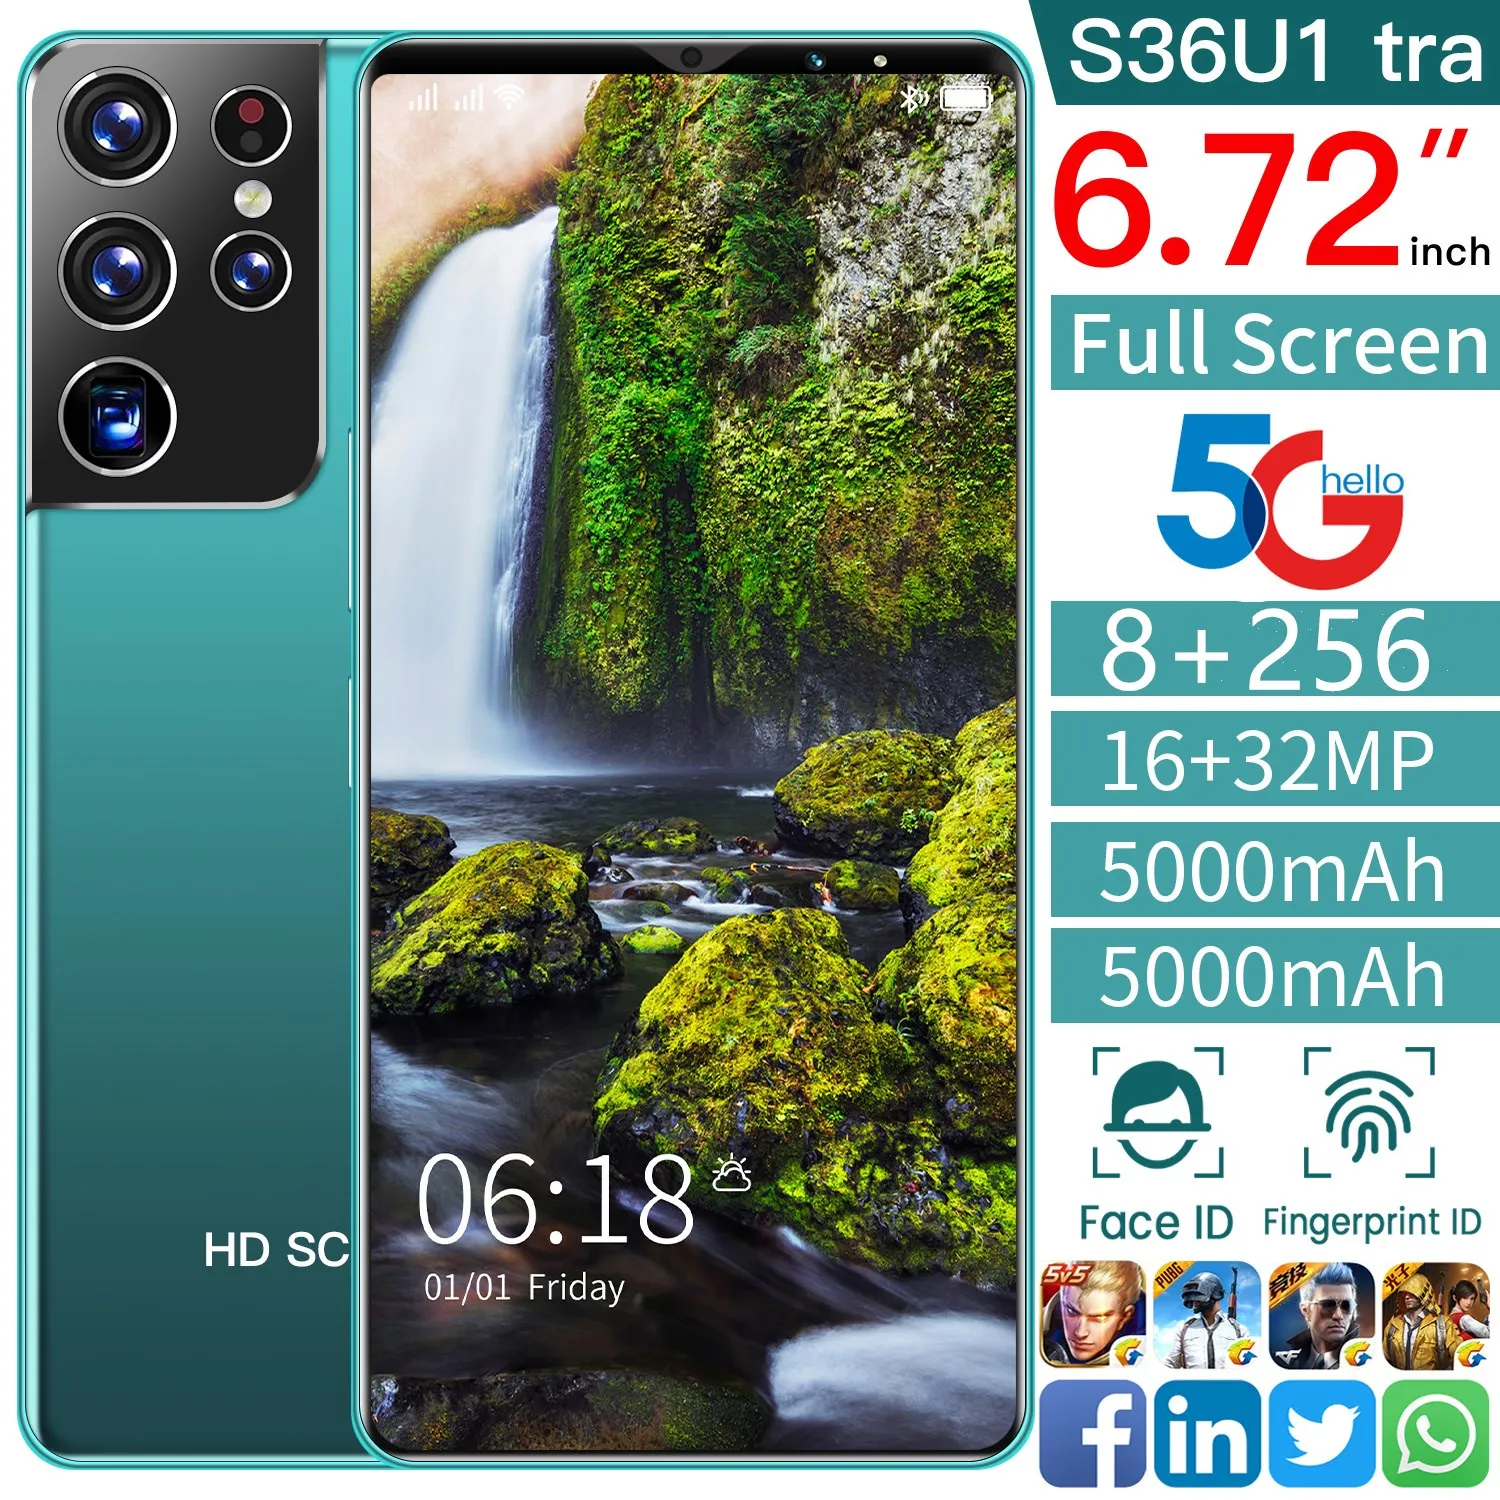 

2021 New Arrival Global Smartphone S36u1 tra 6.72 Full Screen Mobile Phone 8+256G 16MP+32MP 5000MAH Face Fingerprint ID 5G